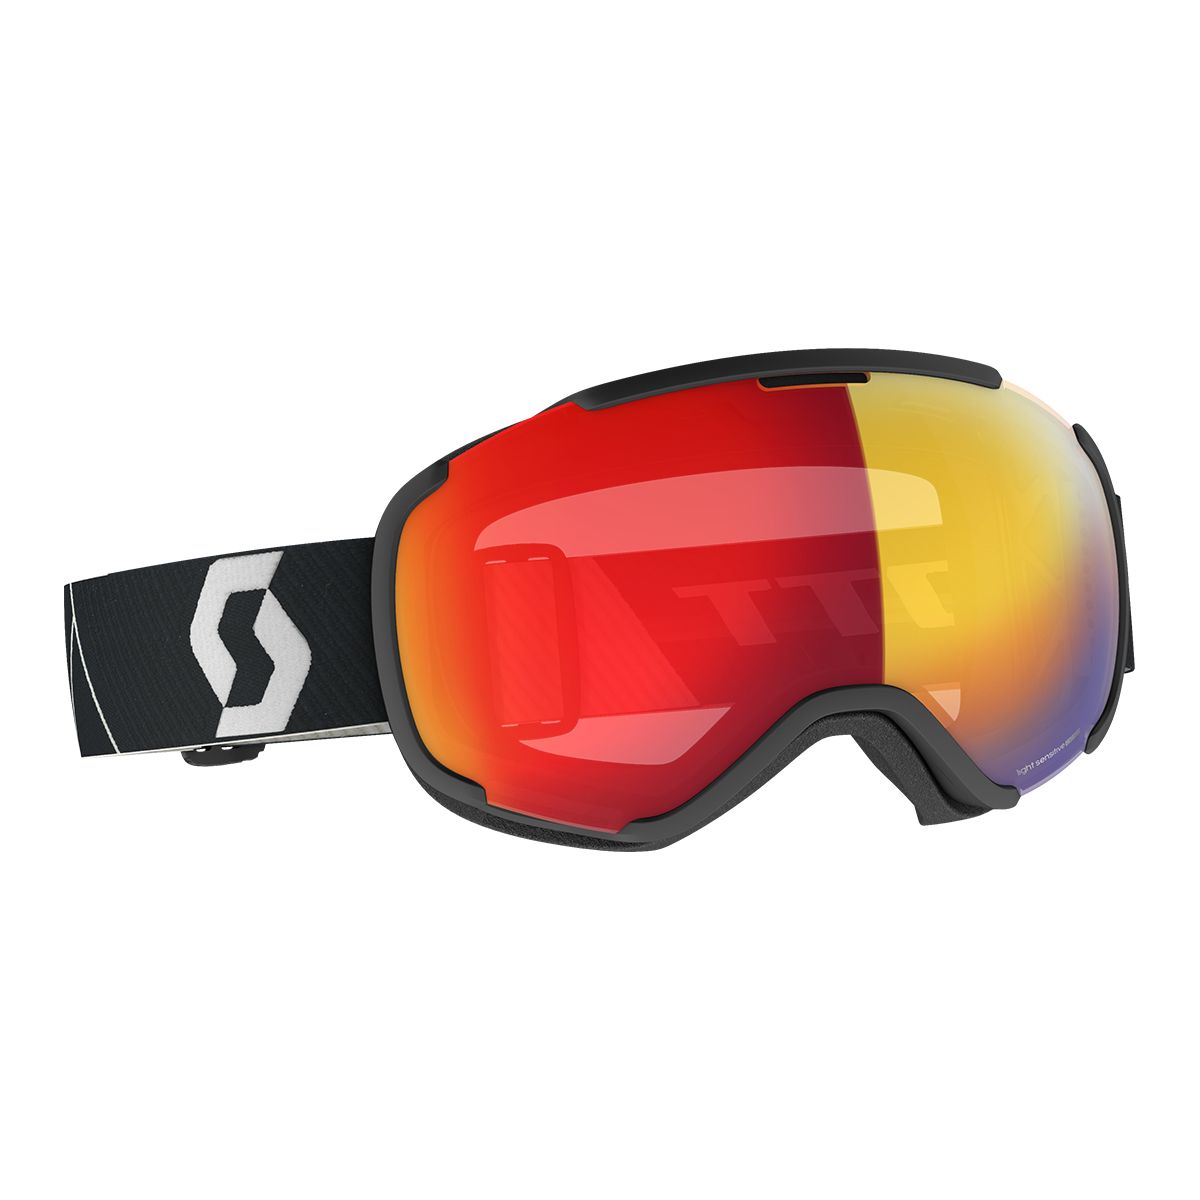 Scott Faze II Light Sensitive Ski & Snowboard Goggles 2021/22 Black with Red Chrome Lens